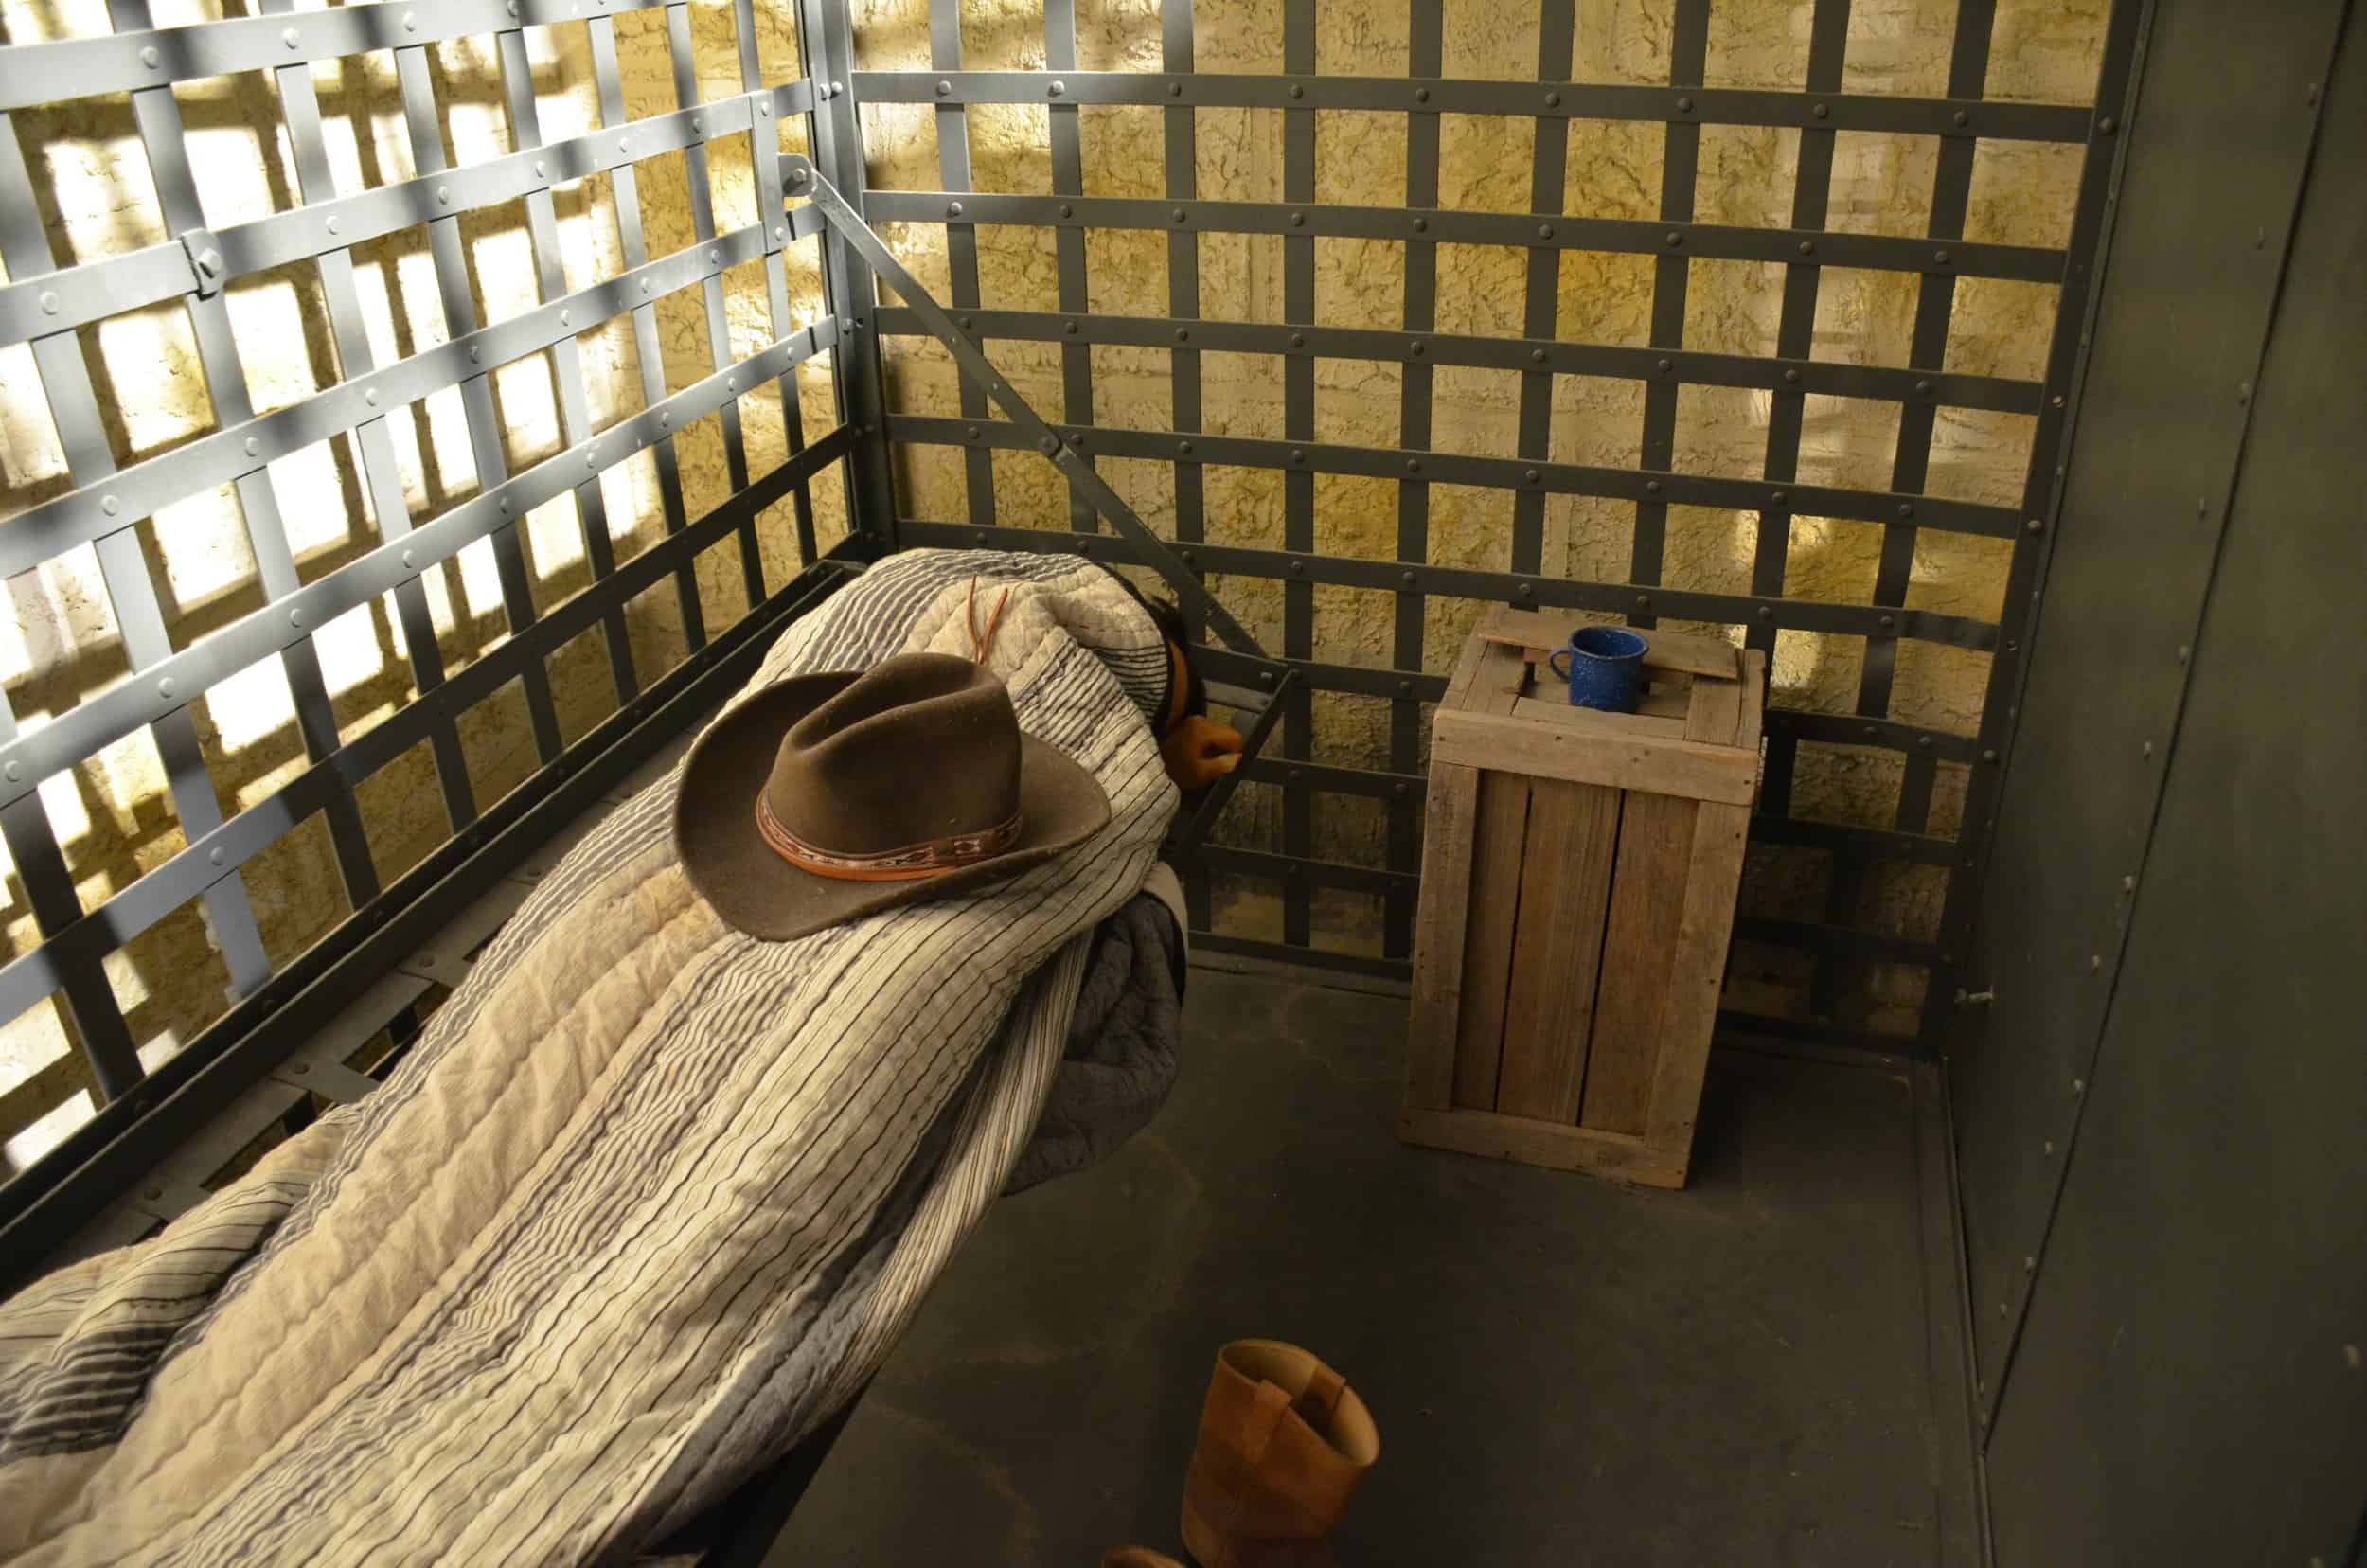 Sleeping prisoner in Ranger Town at the Texas Ranger Museum in San Antonio, Texas